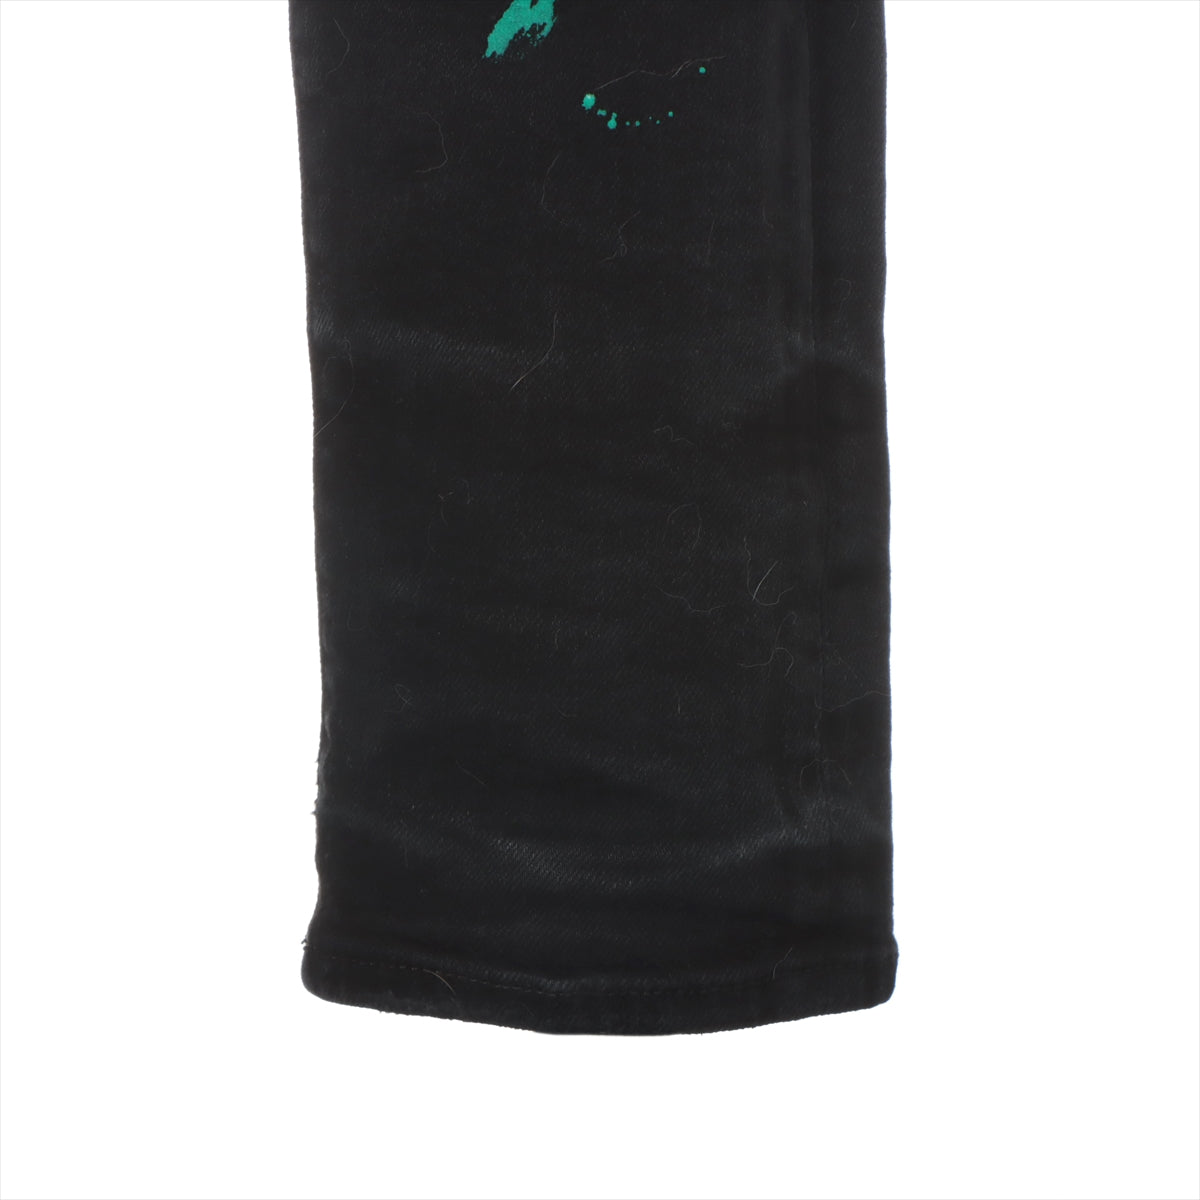 AMIRI Cotton & Polyurethane Denim pants 31 Men's Black  Crash processing paint